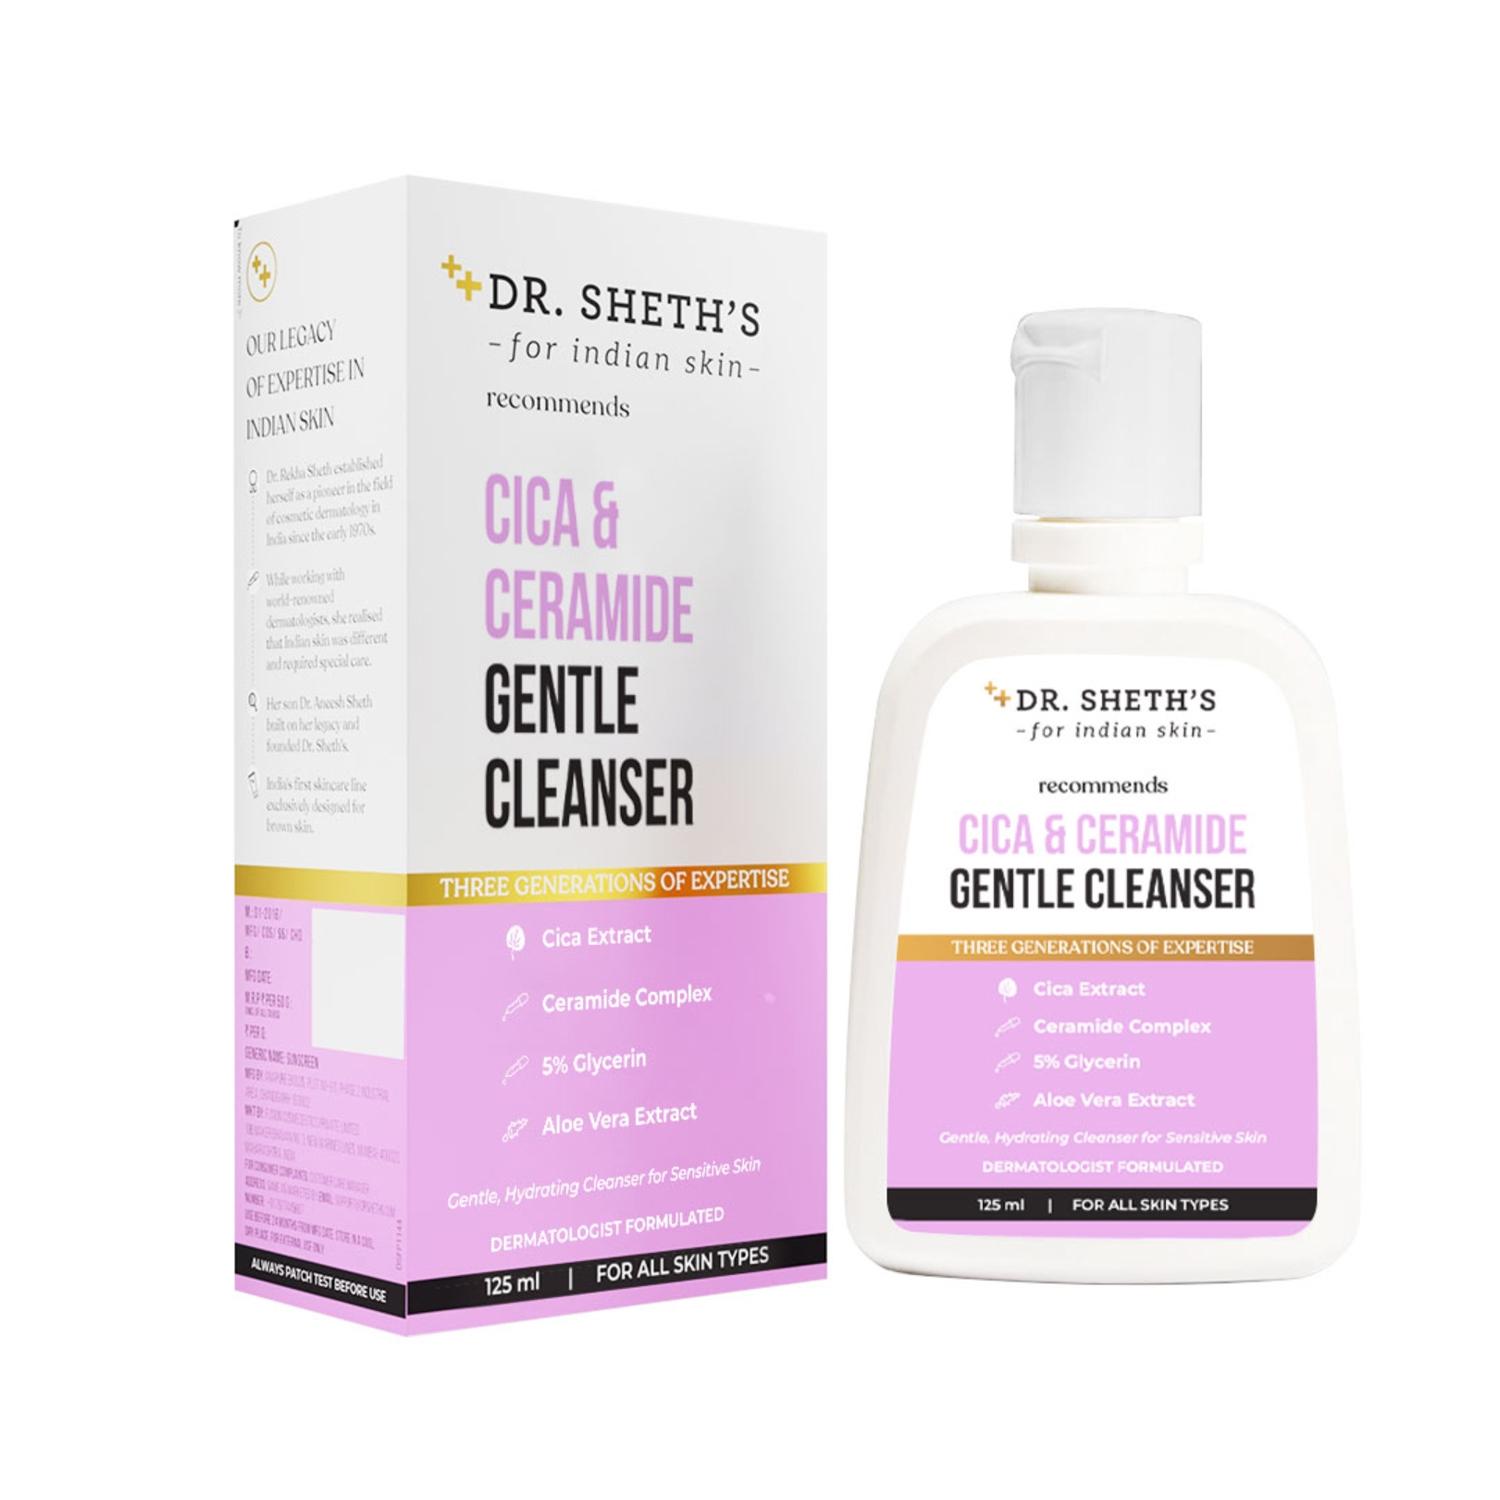 dr. sheth's cica & ceramide gentle cleanser (125ml)